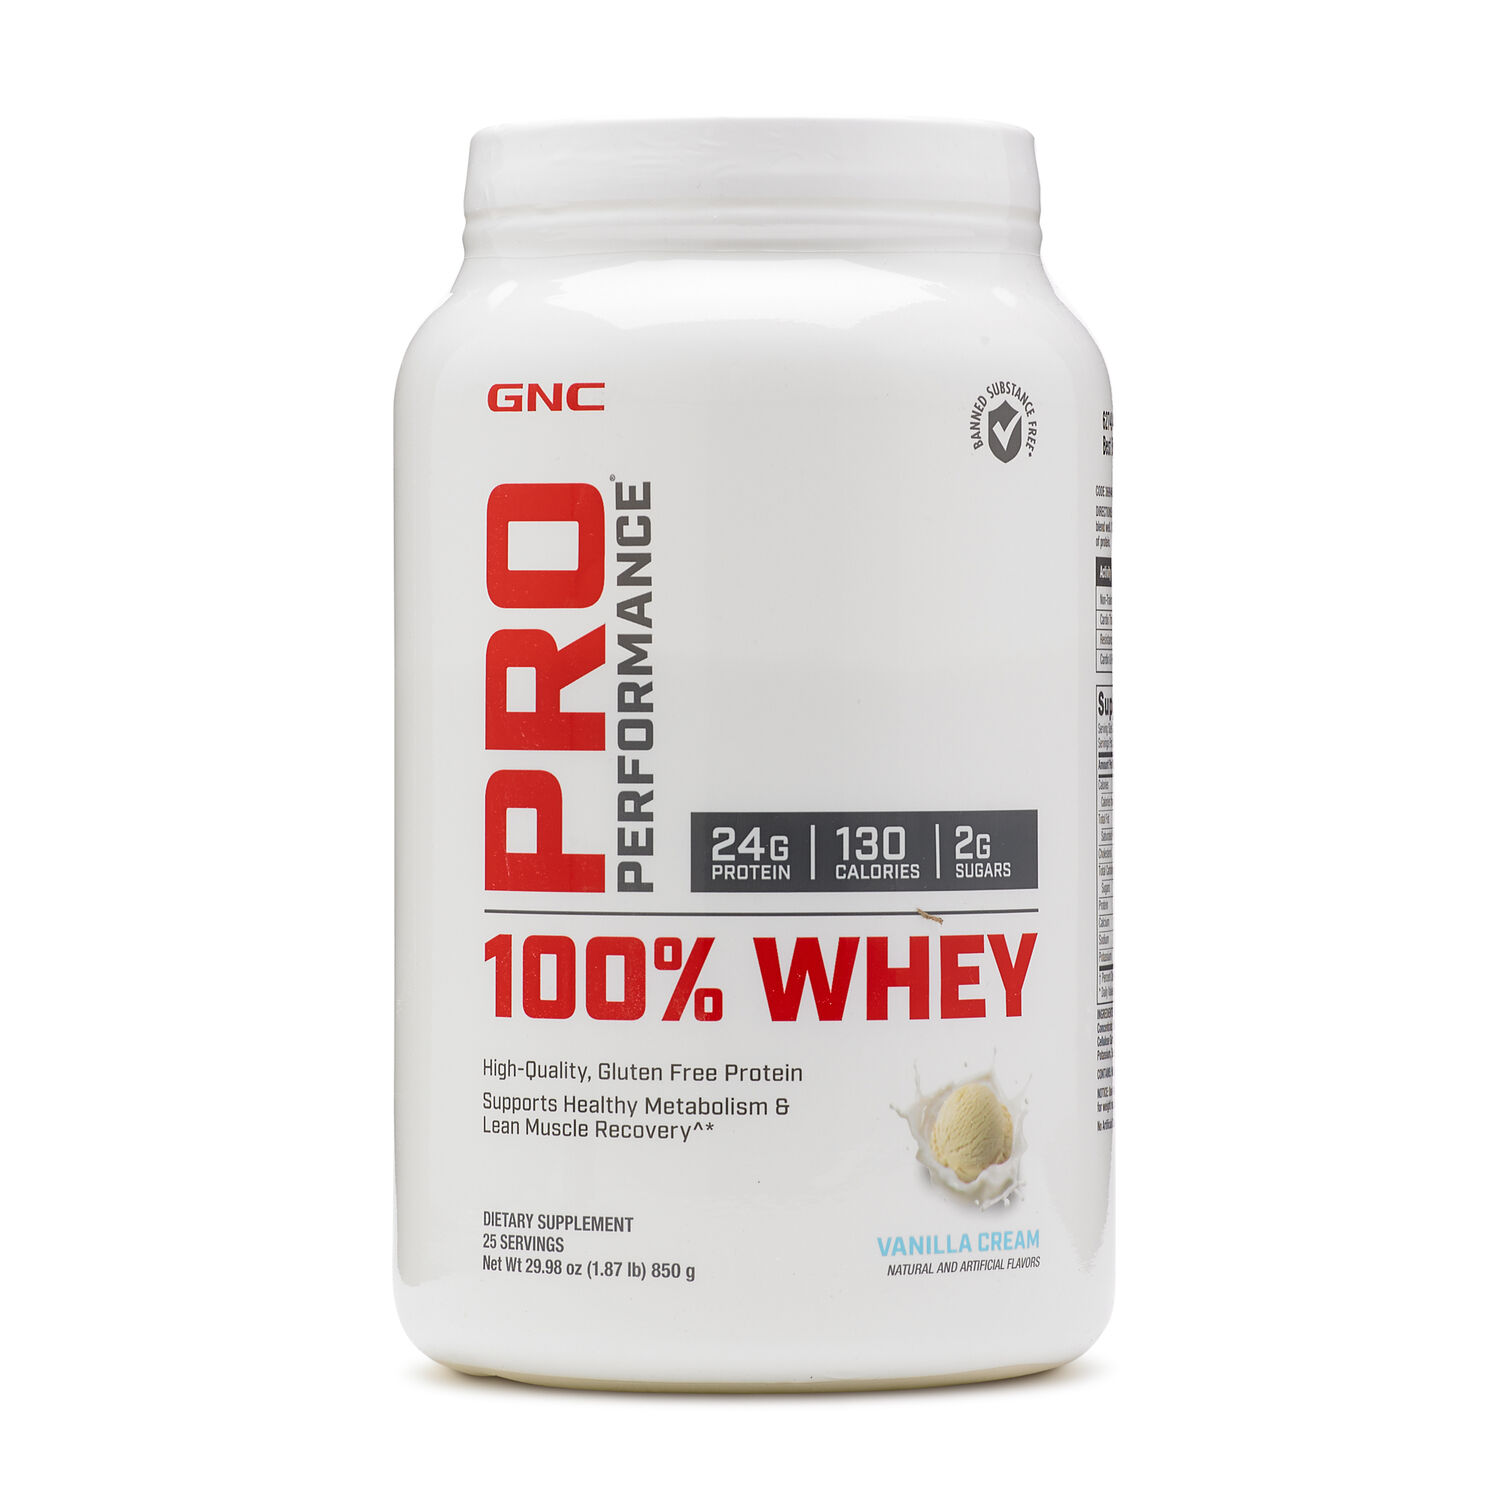  GNC PP 100% Whey Protein Powder